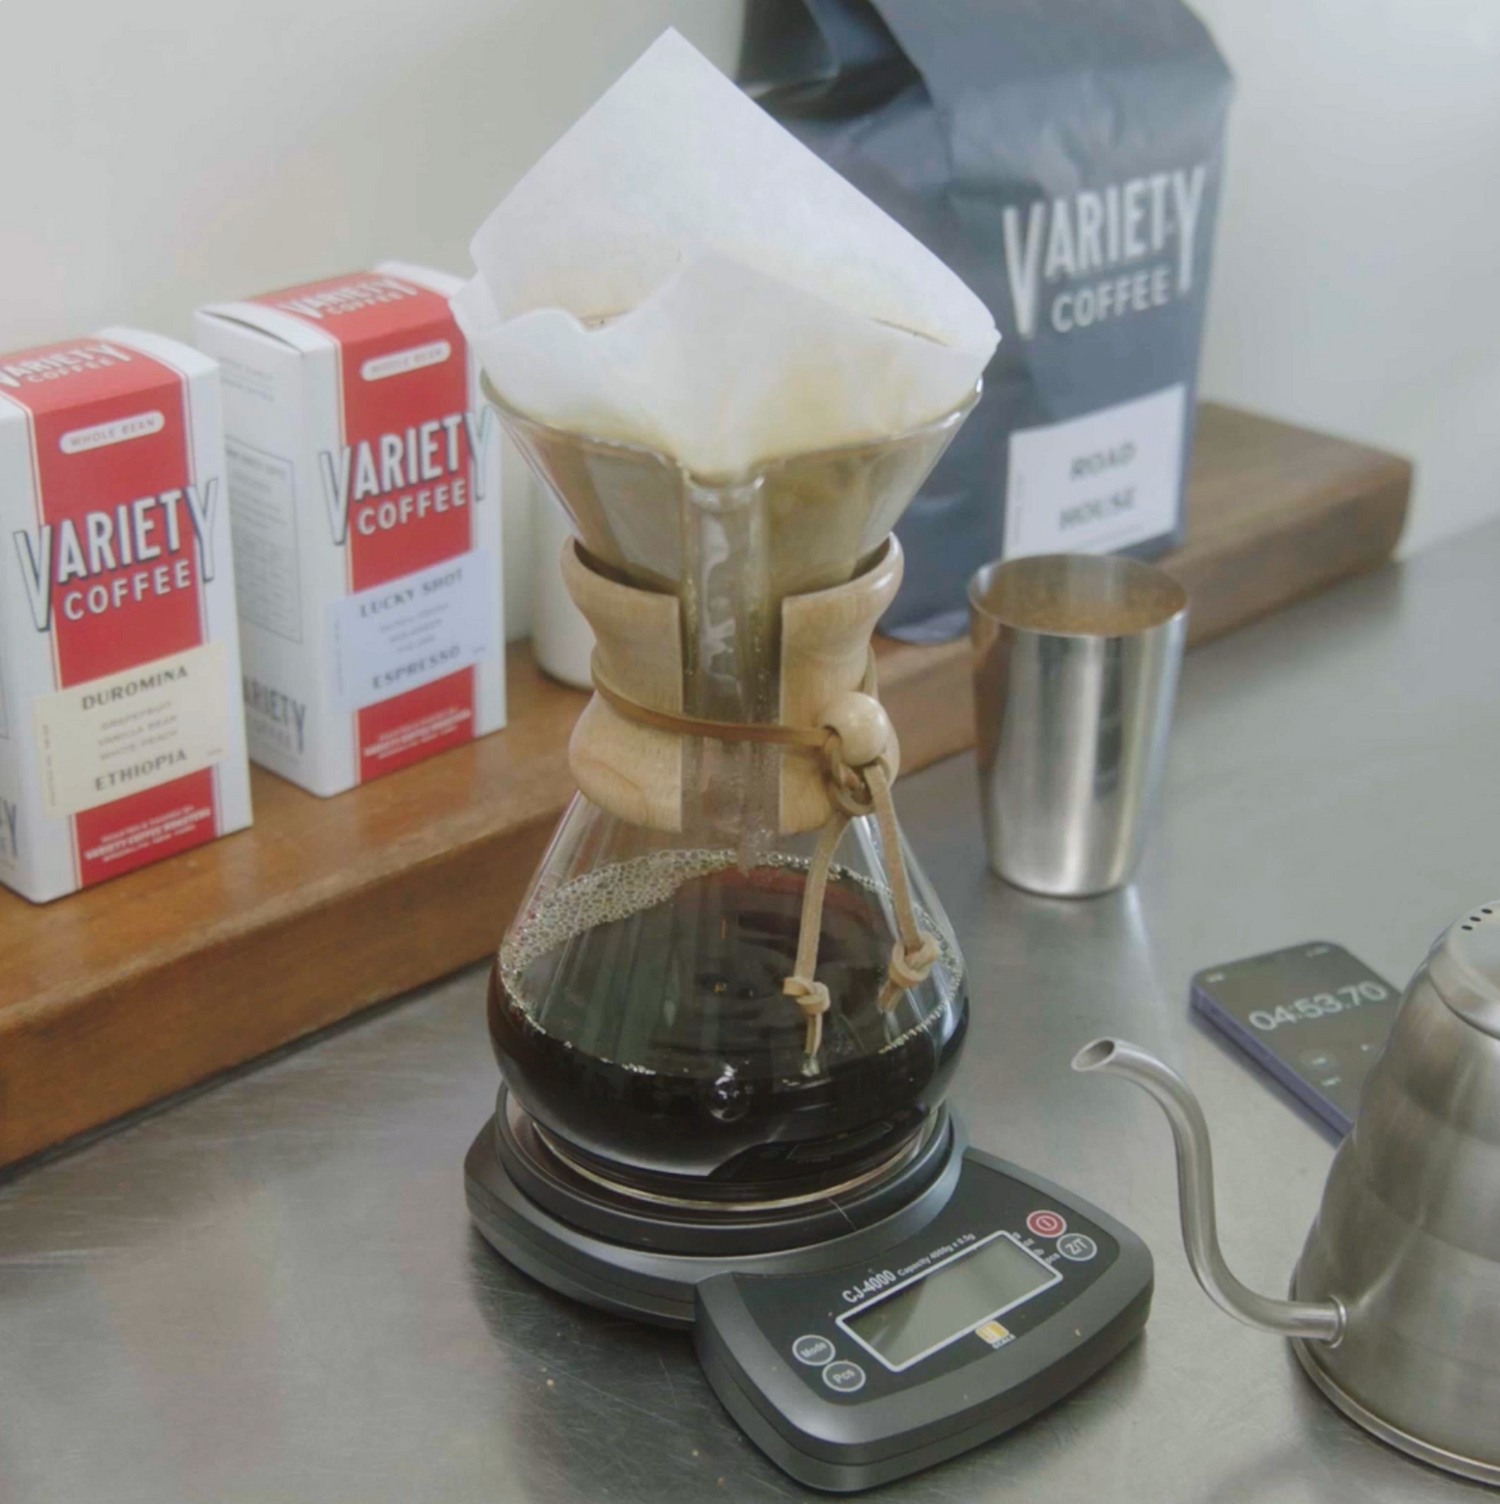 Chemex Coffee Maker – Colombia Coffee Roasters